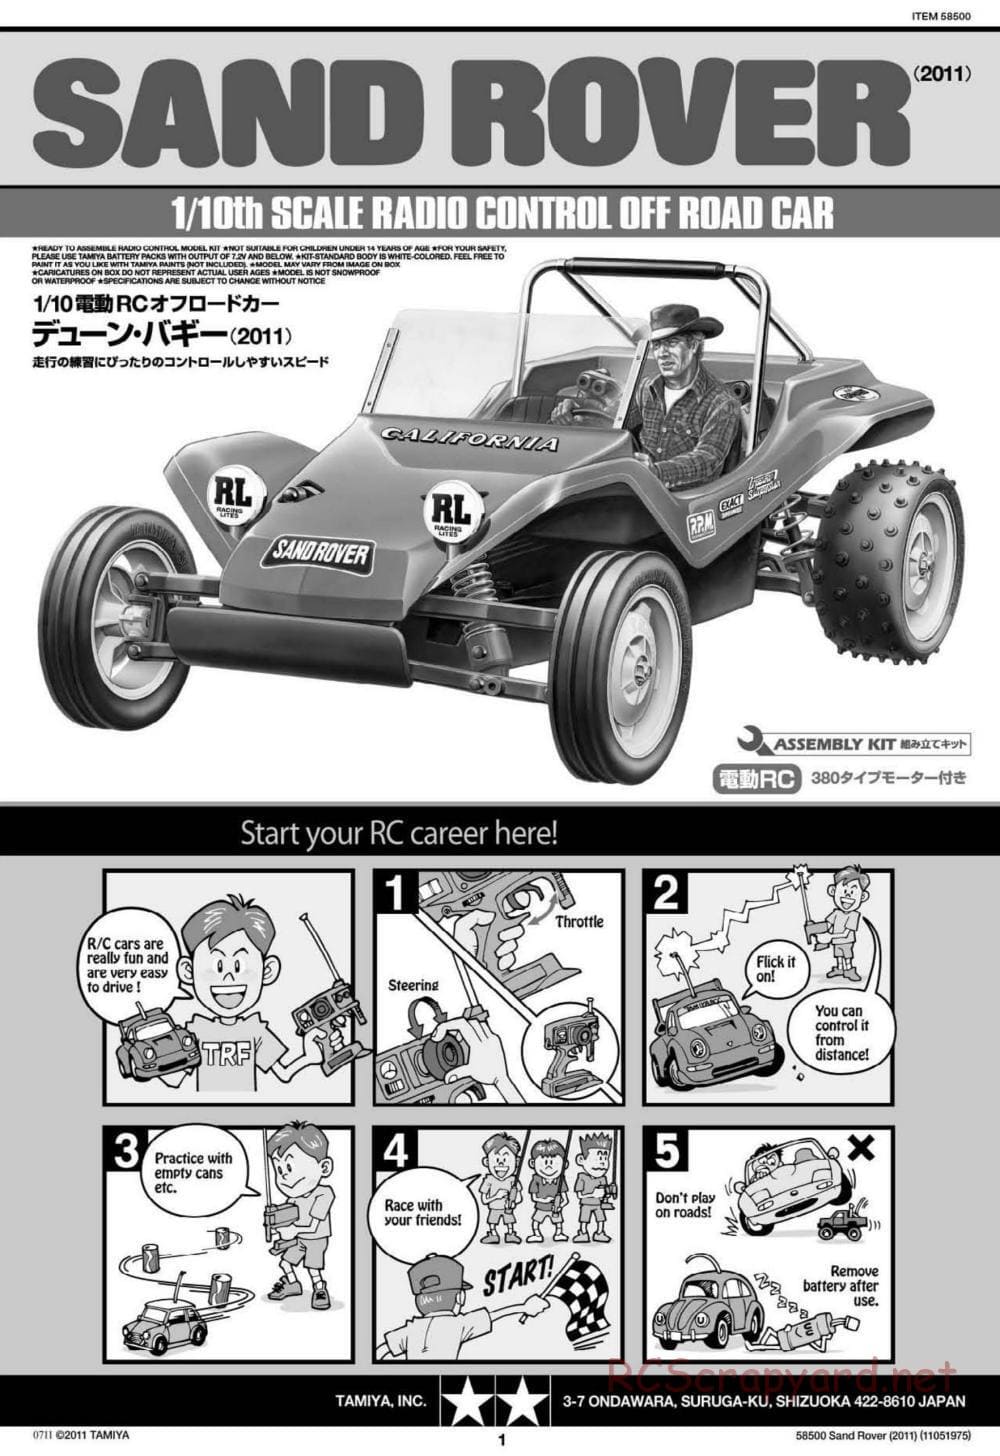 Tamiya - Sand Rover 2011 Chassis - Manual - Page 1